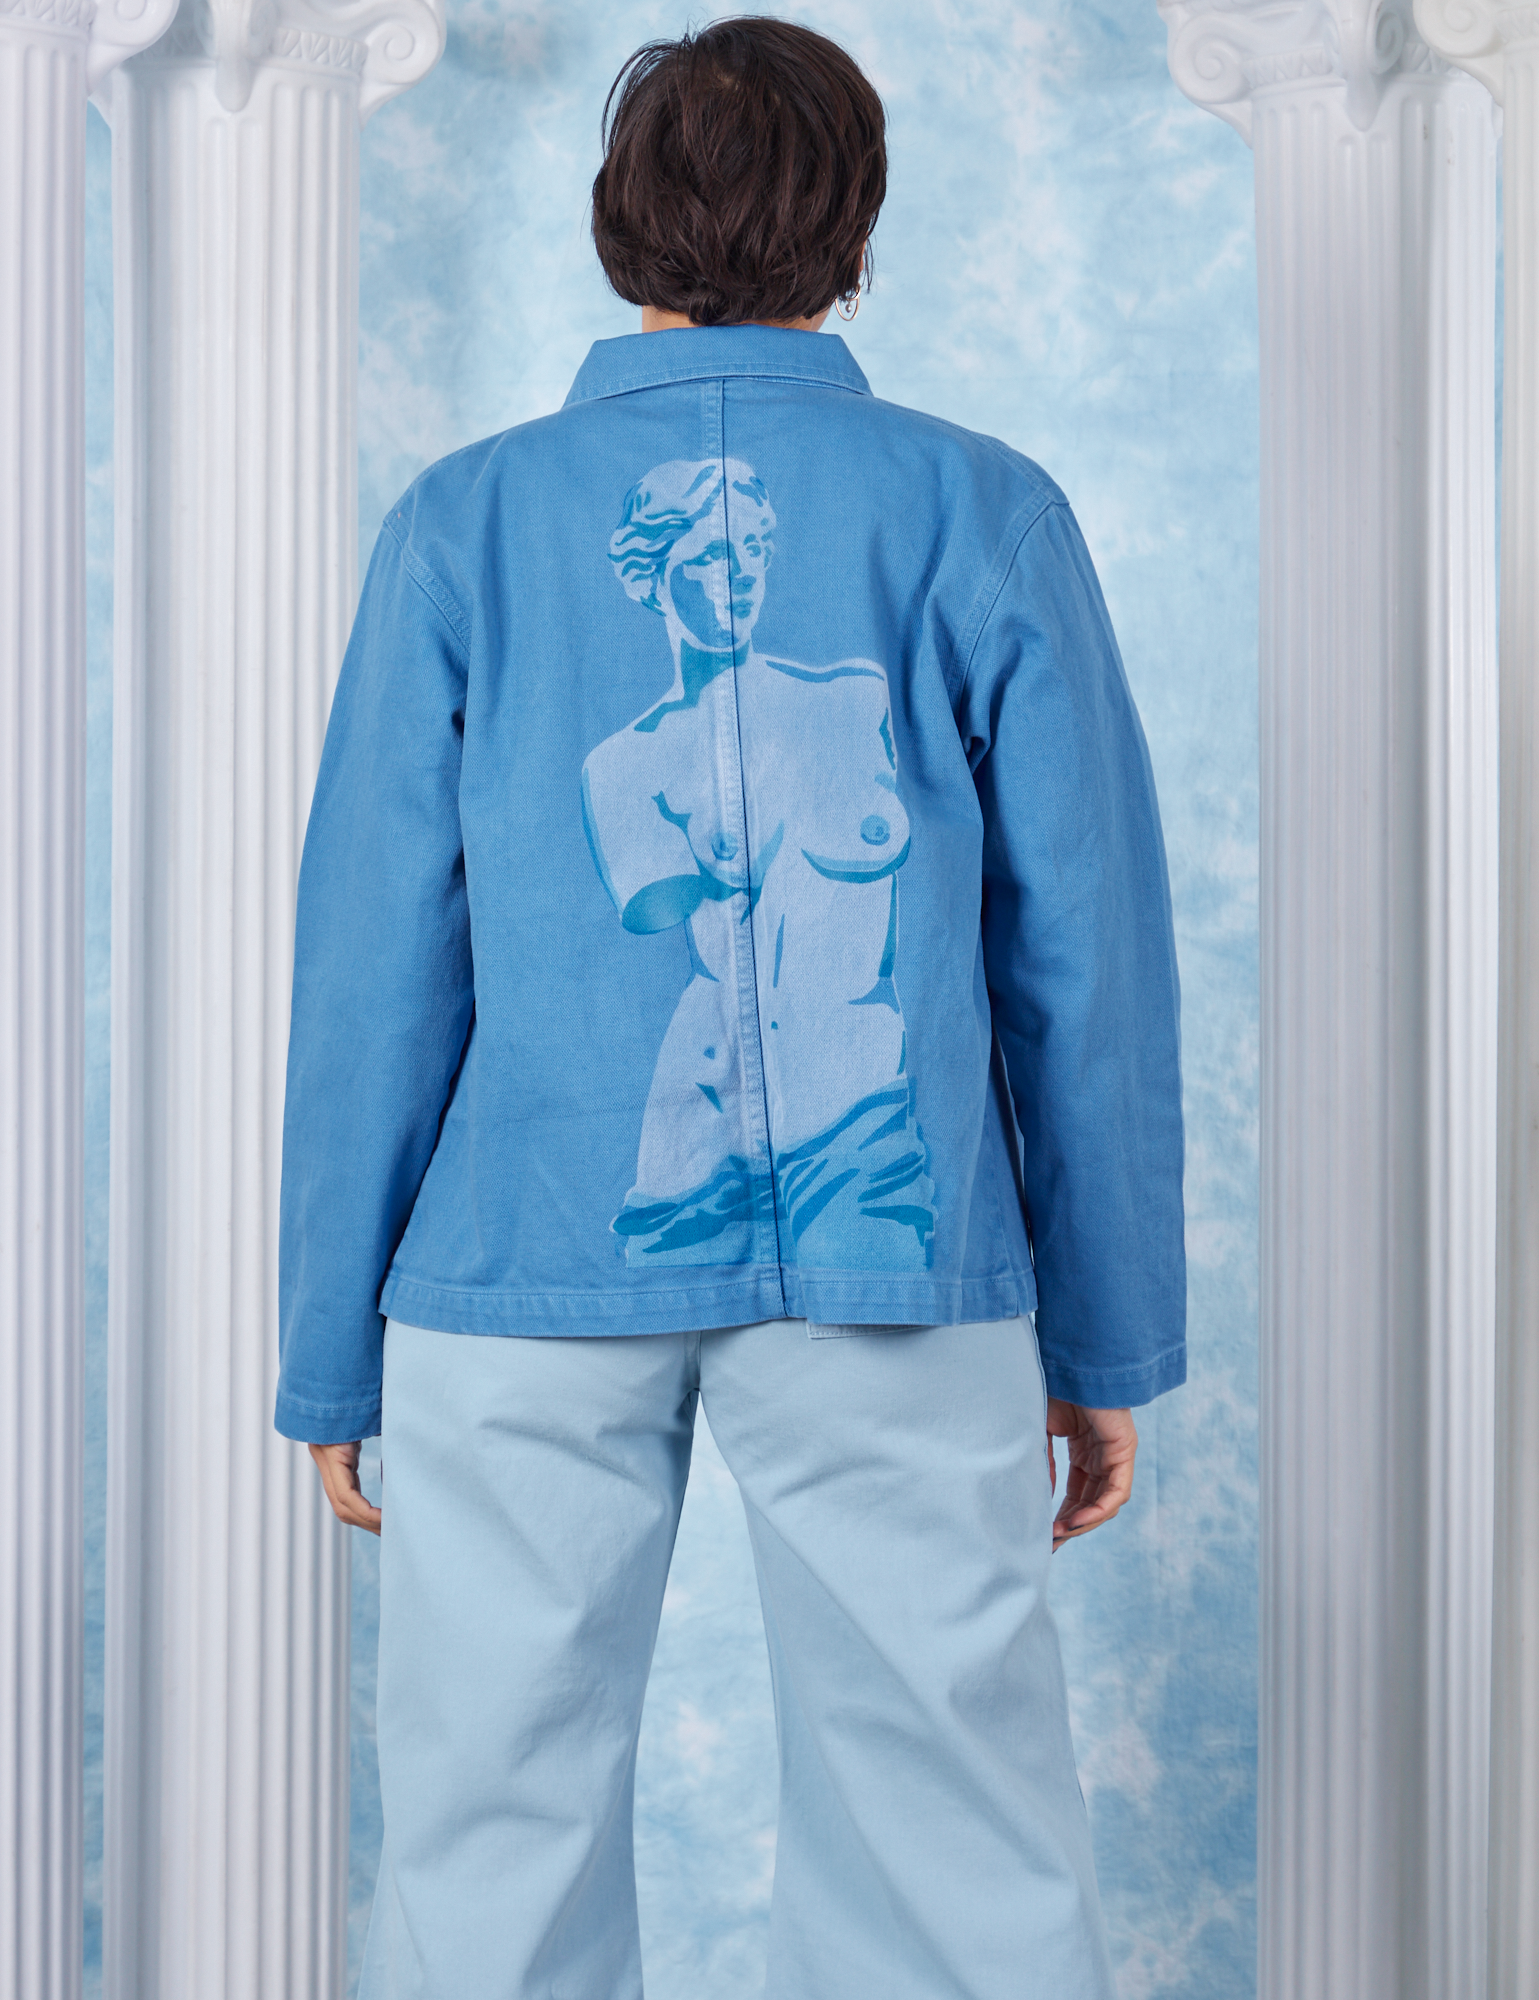 Neoclassical Work Jacket in Blue Venus back view on Tiara wearing baby blue Bell Bottoms